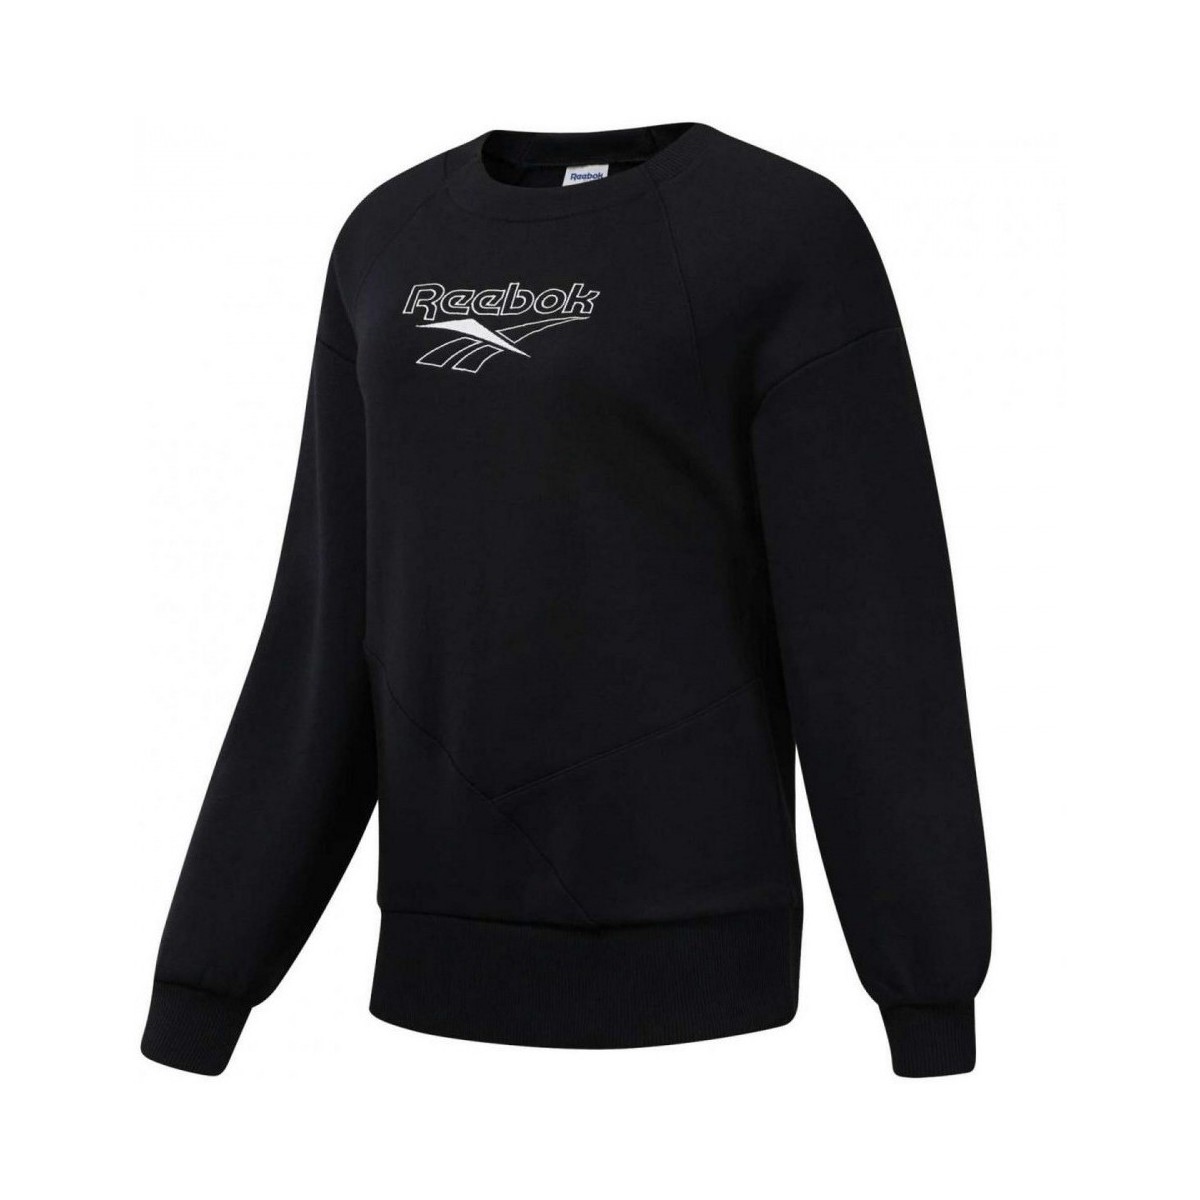 Textiel Dames Sweaters / Sweatshirts Reebok Sport Cl V Crew Zwart